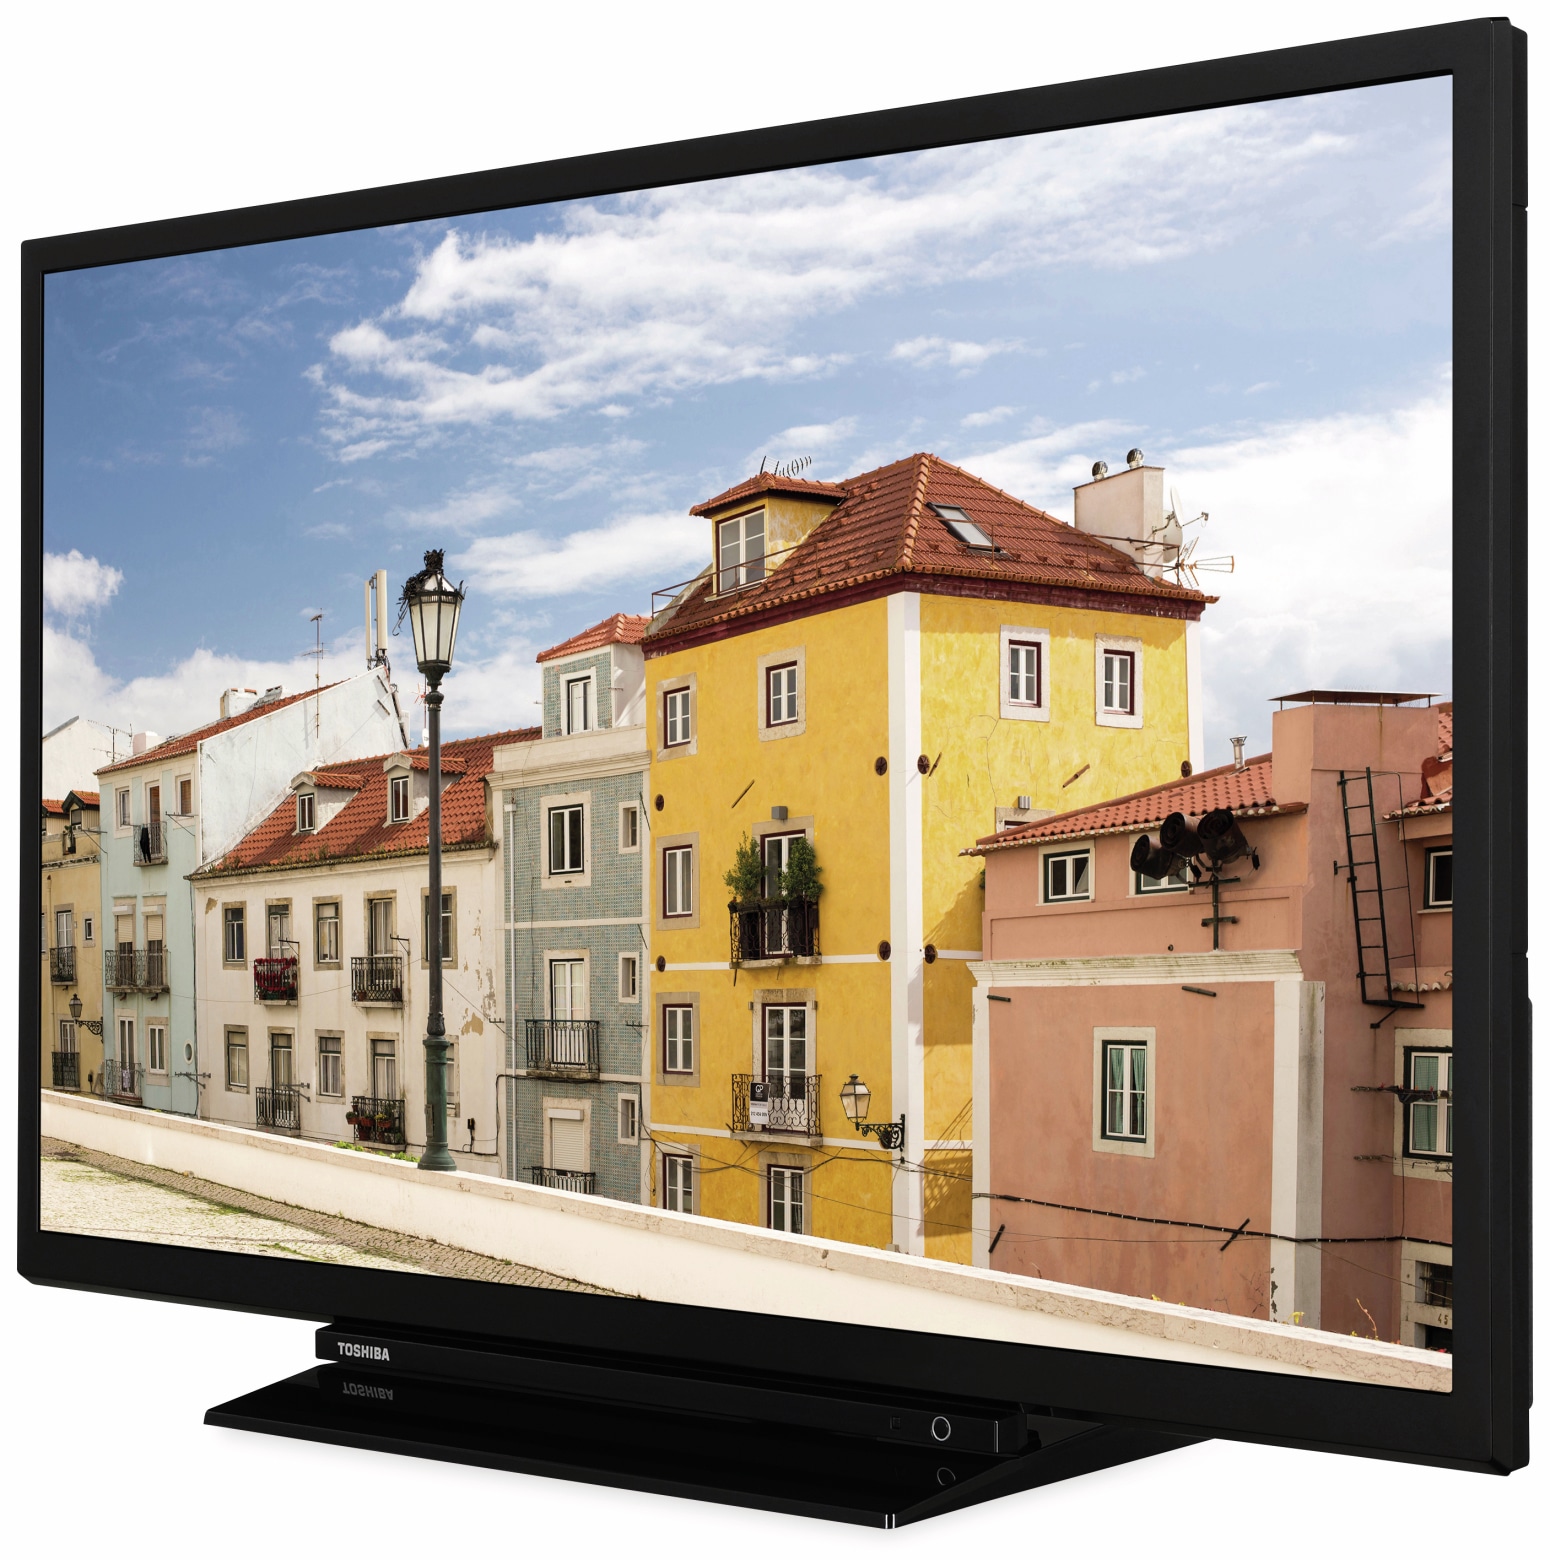 Toshiba LED-TV 32W3963 DA, EEK: A+, 80 cm (32"), schwarz